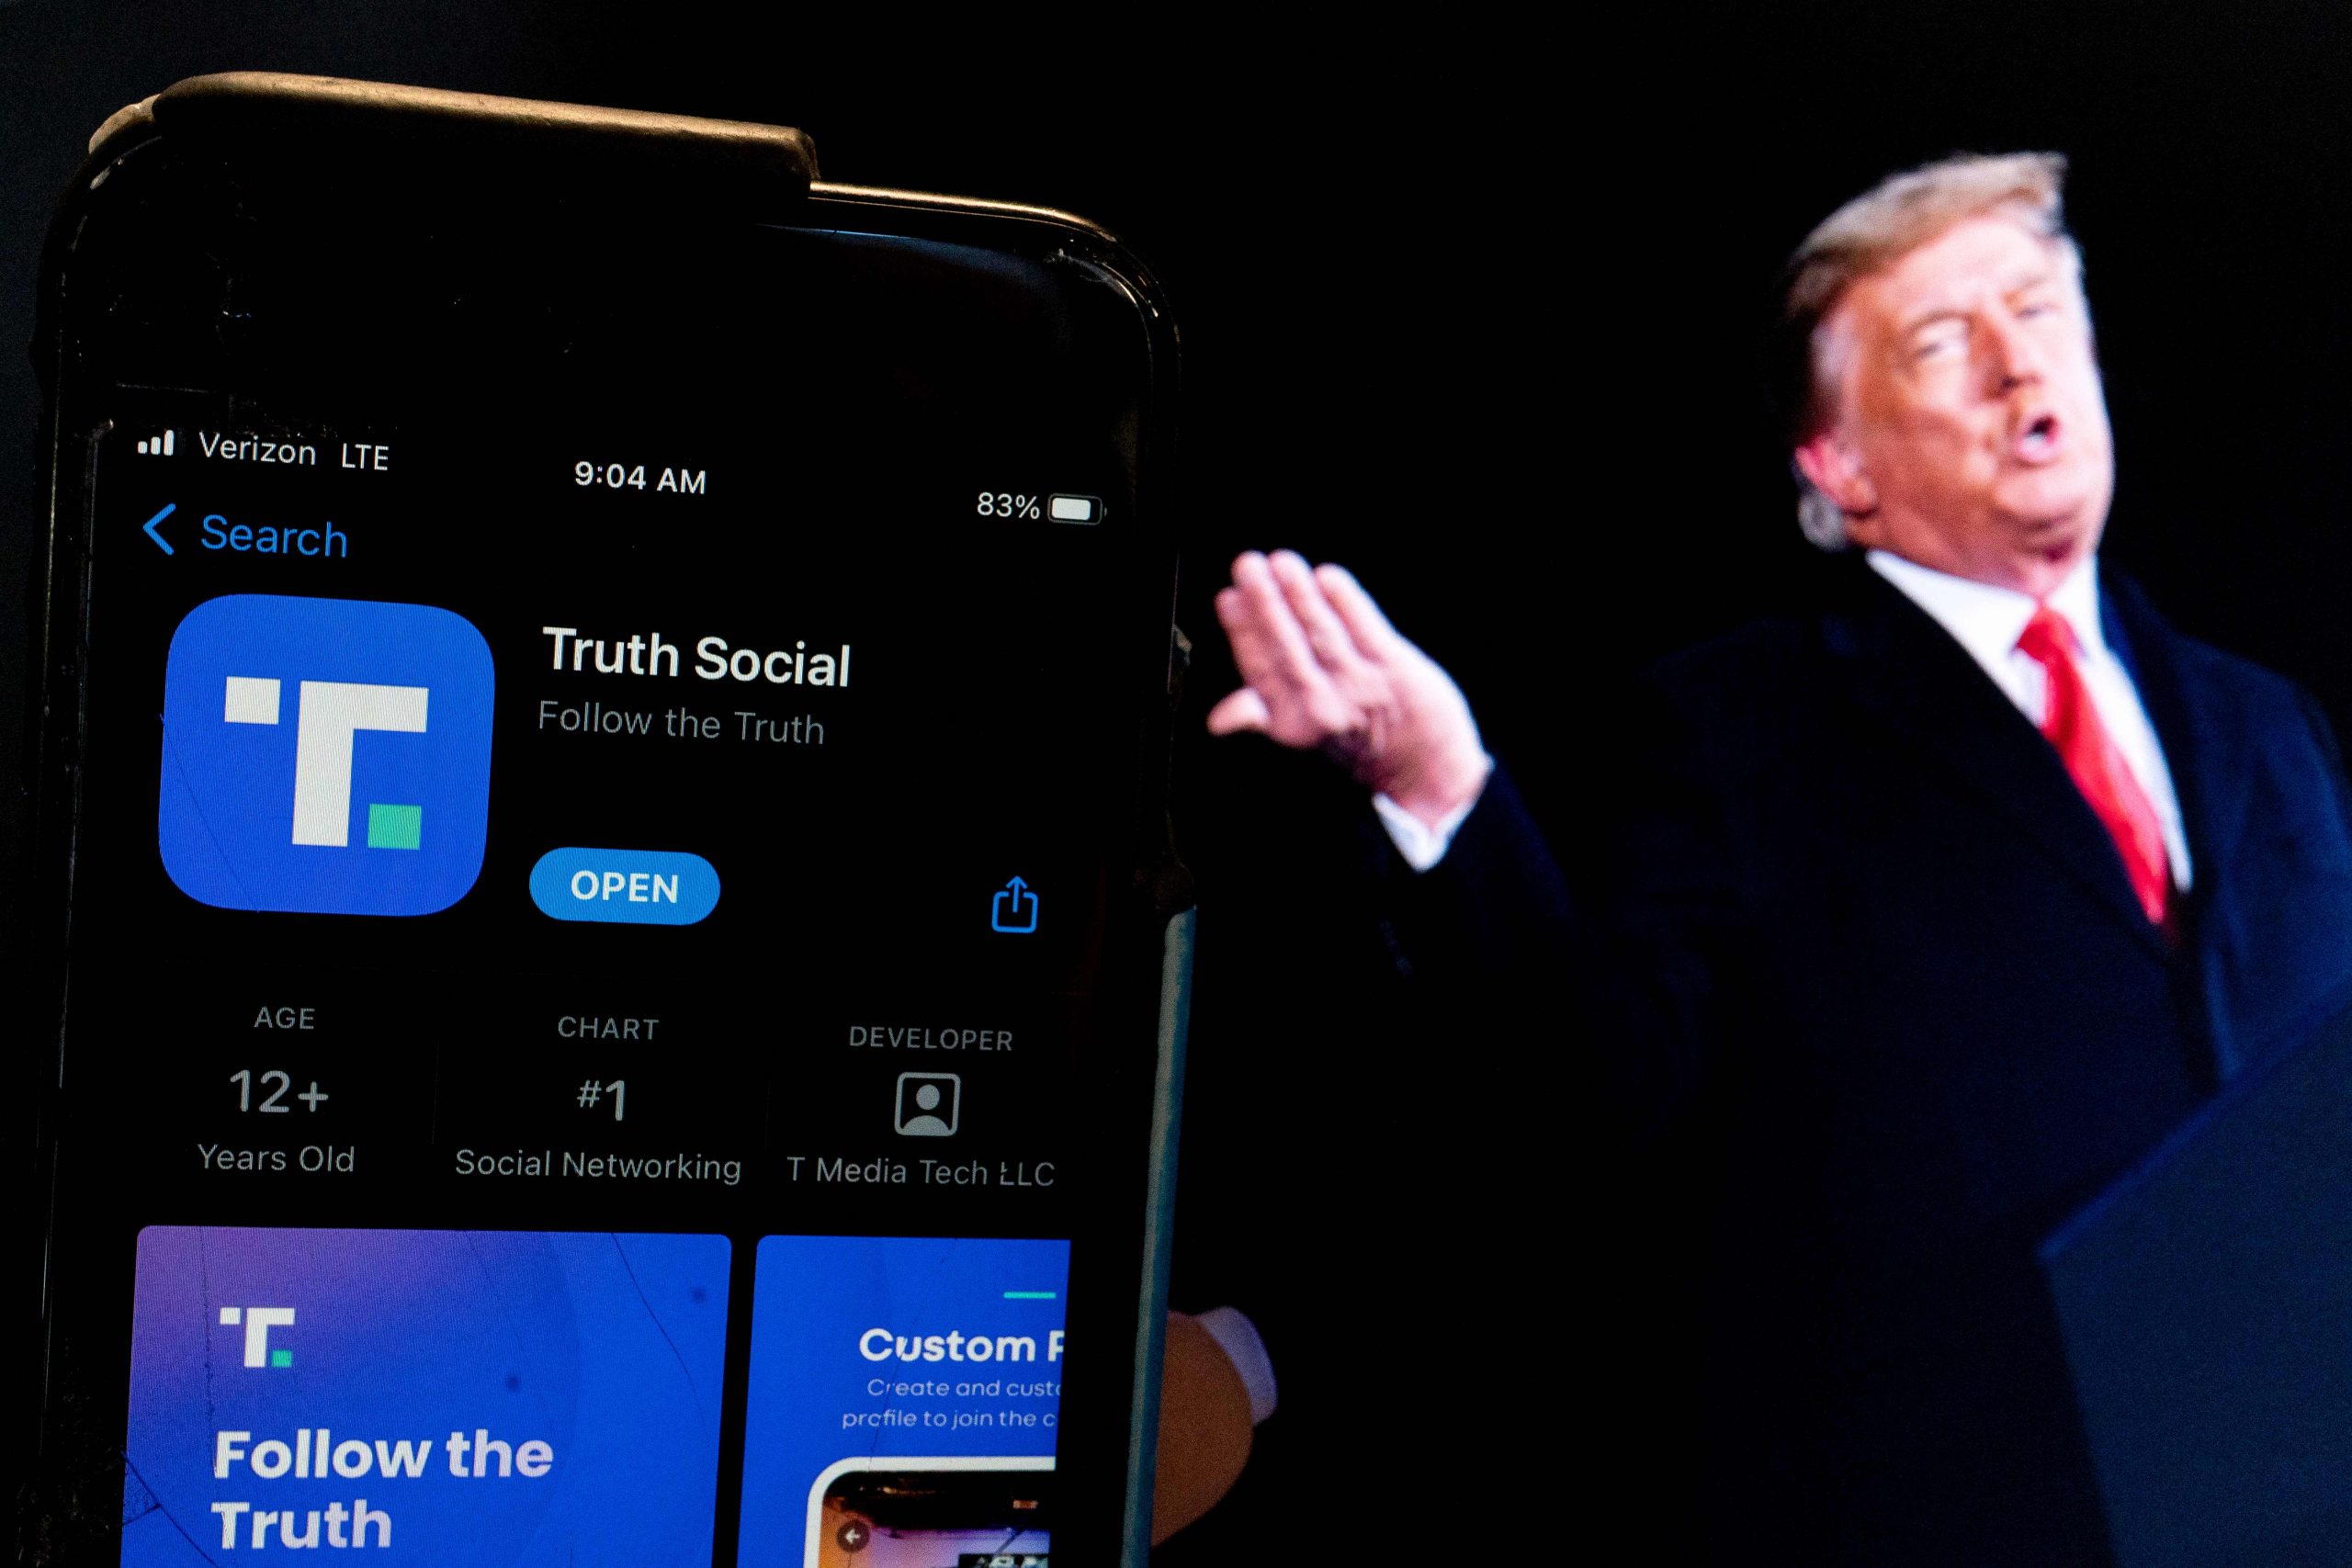 “Truth Social”: شبكة اجتماعية لدونالد ترامب تسعى إلى منافسة Facebook و Twitter و YouTube (مشاكل تقنية و “ارتفاع الطلب”)